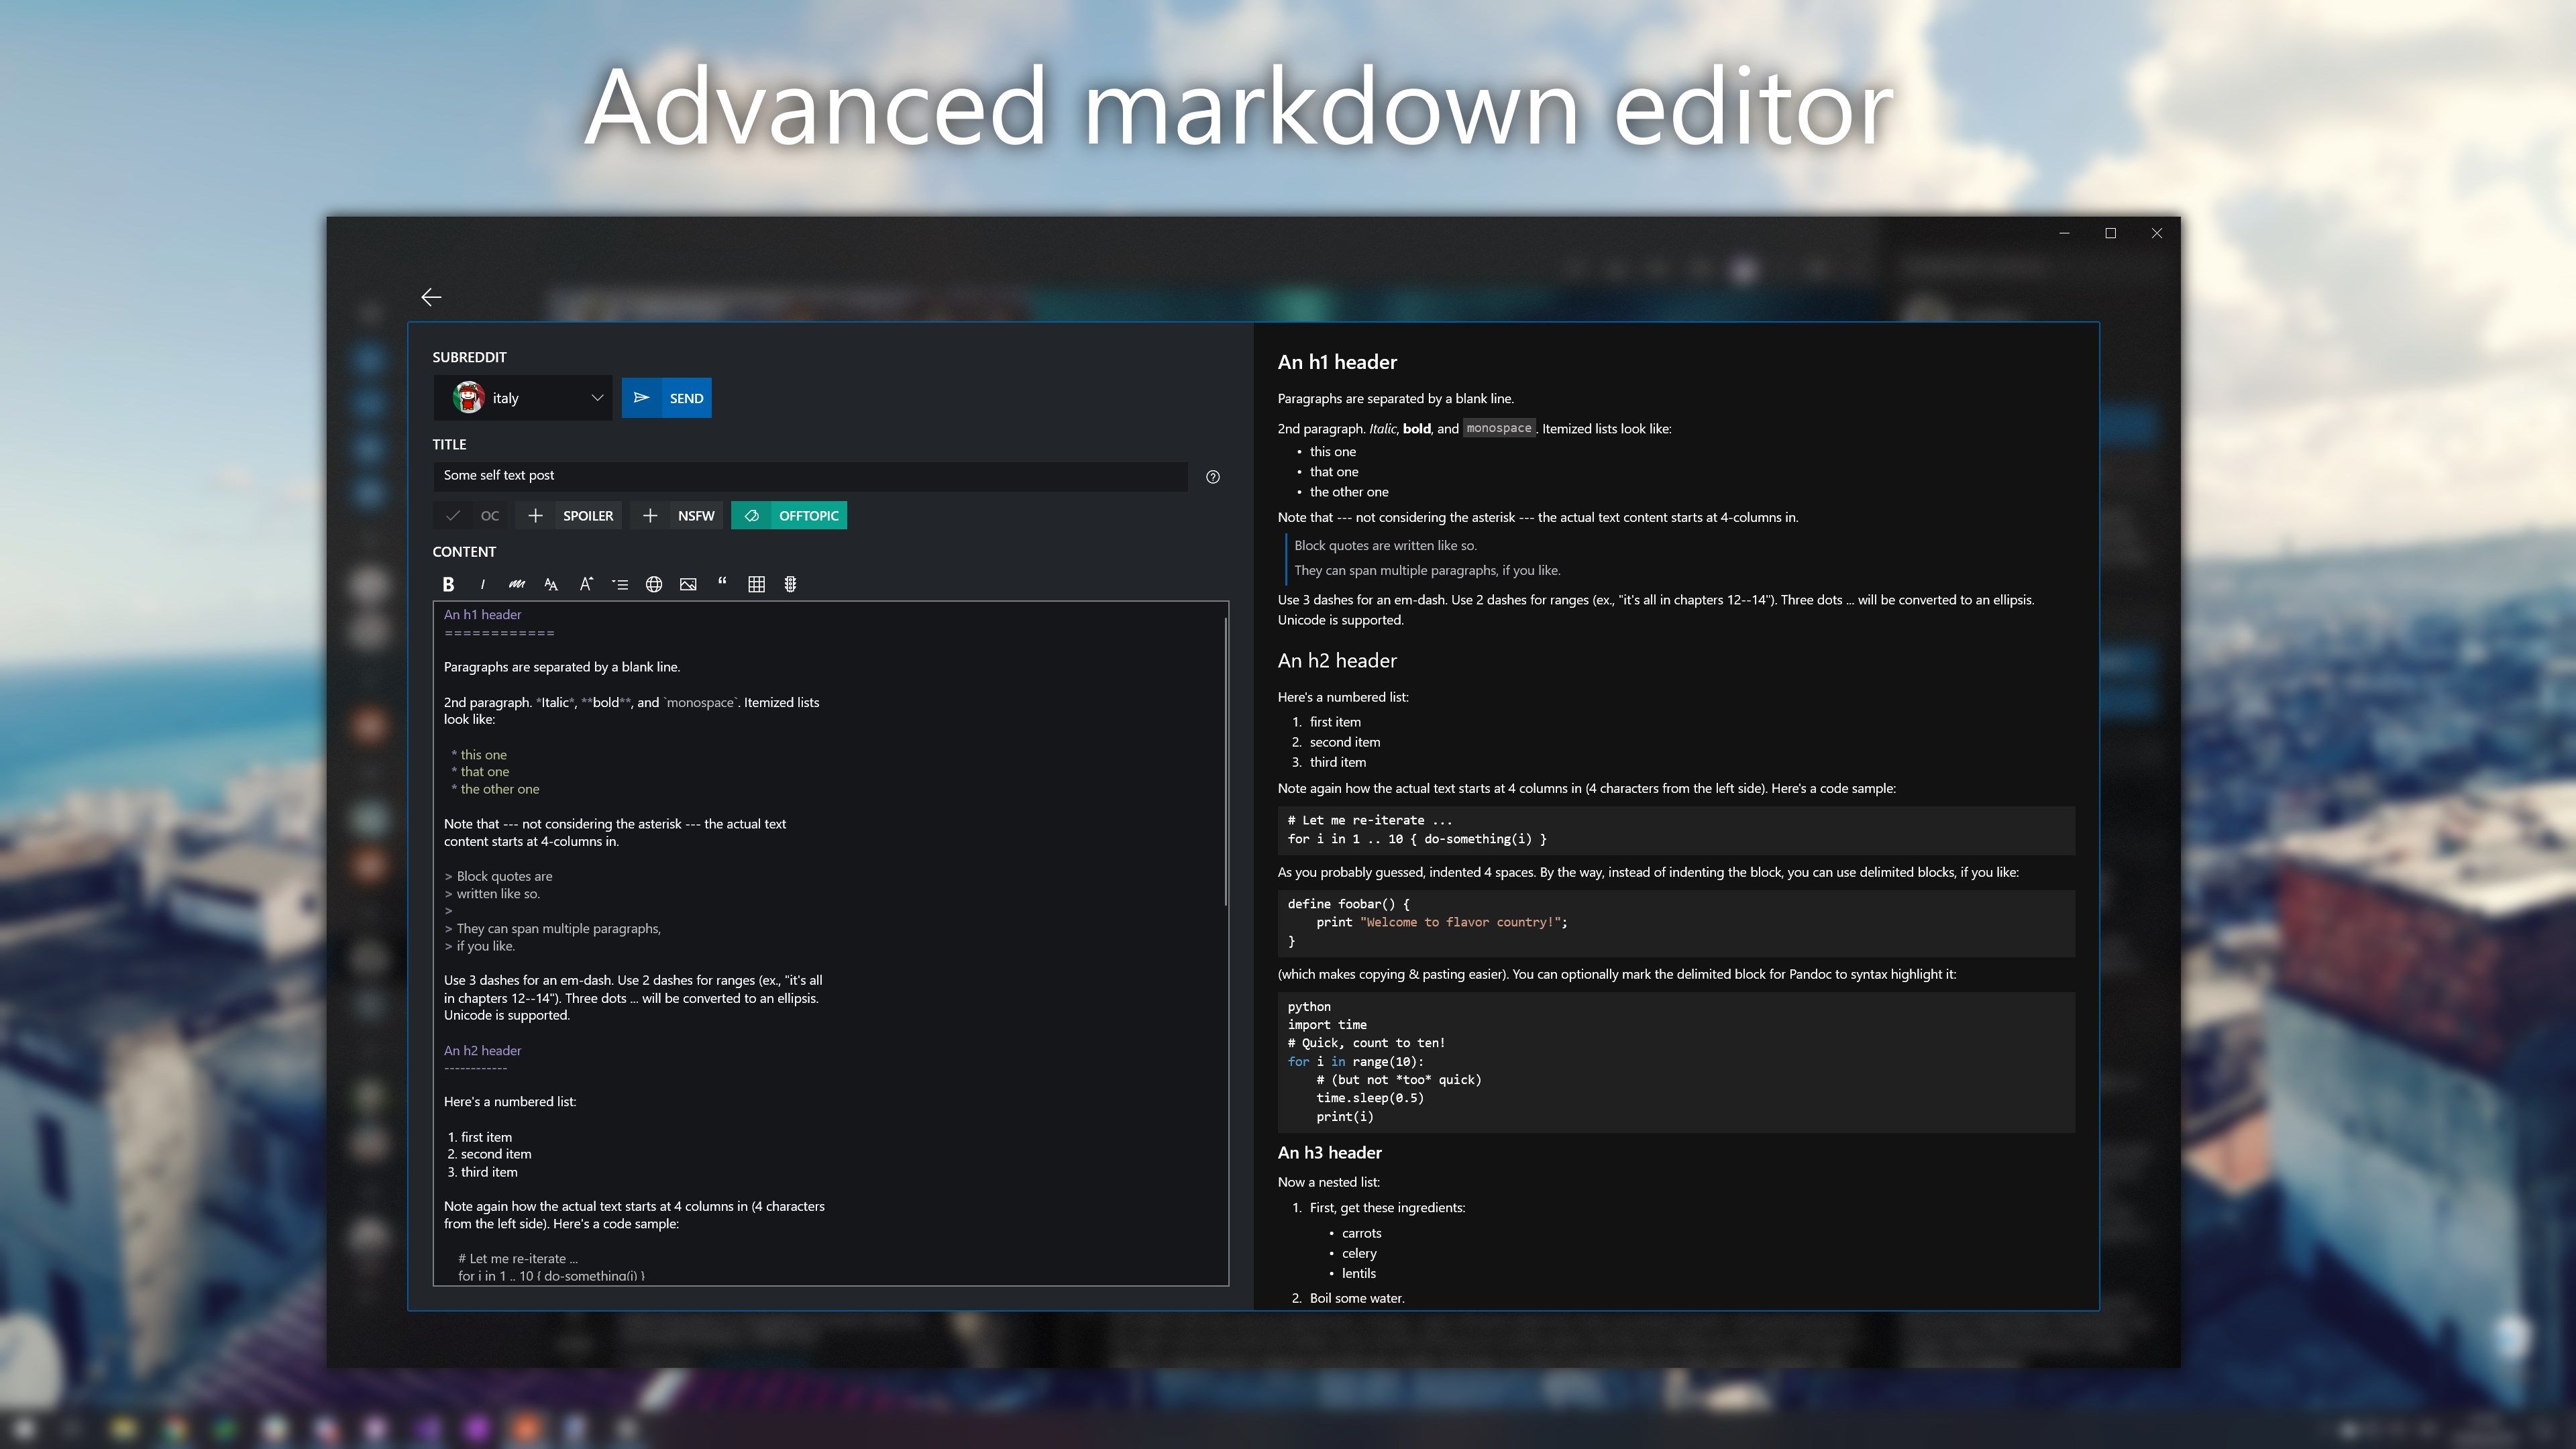 Advanced markdown editor